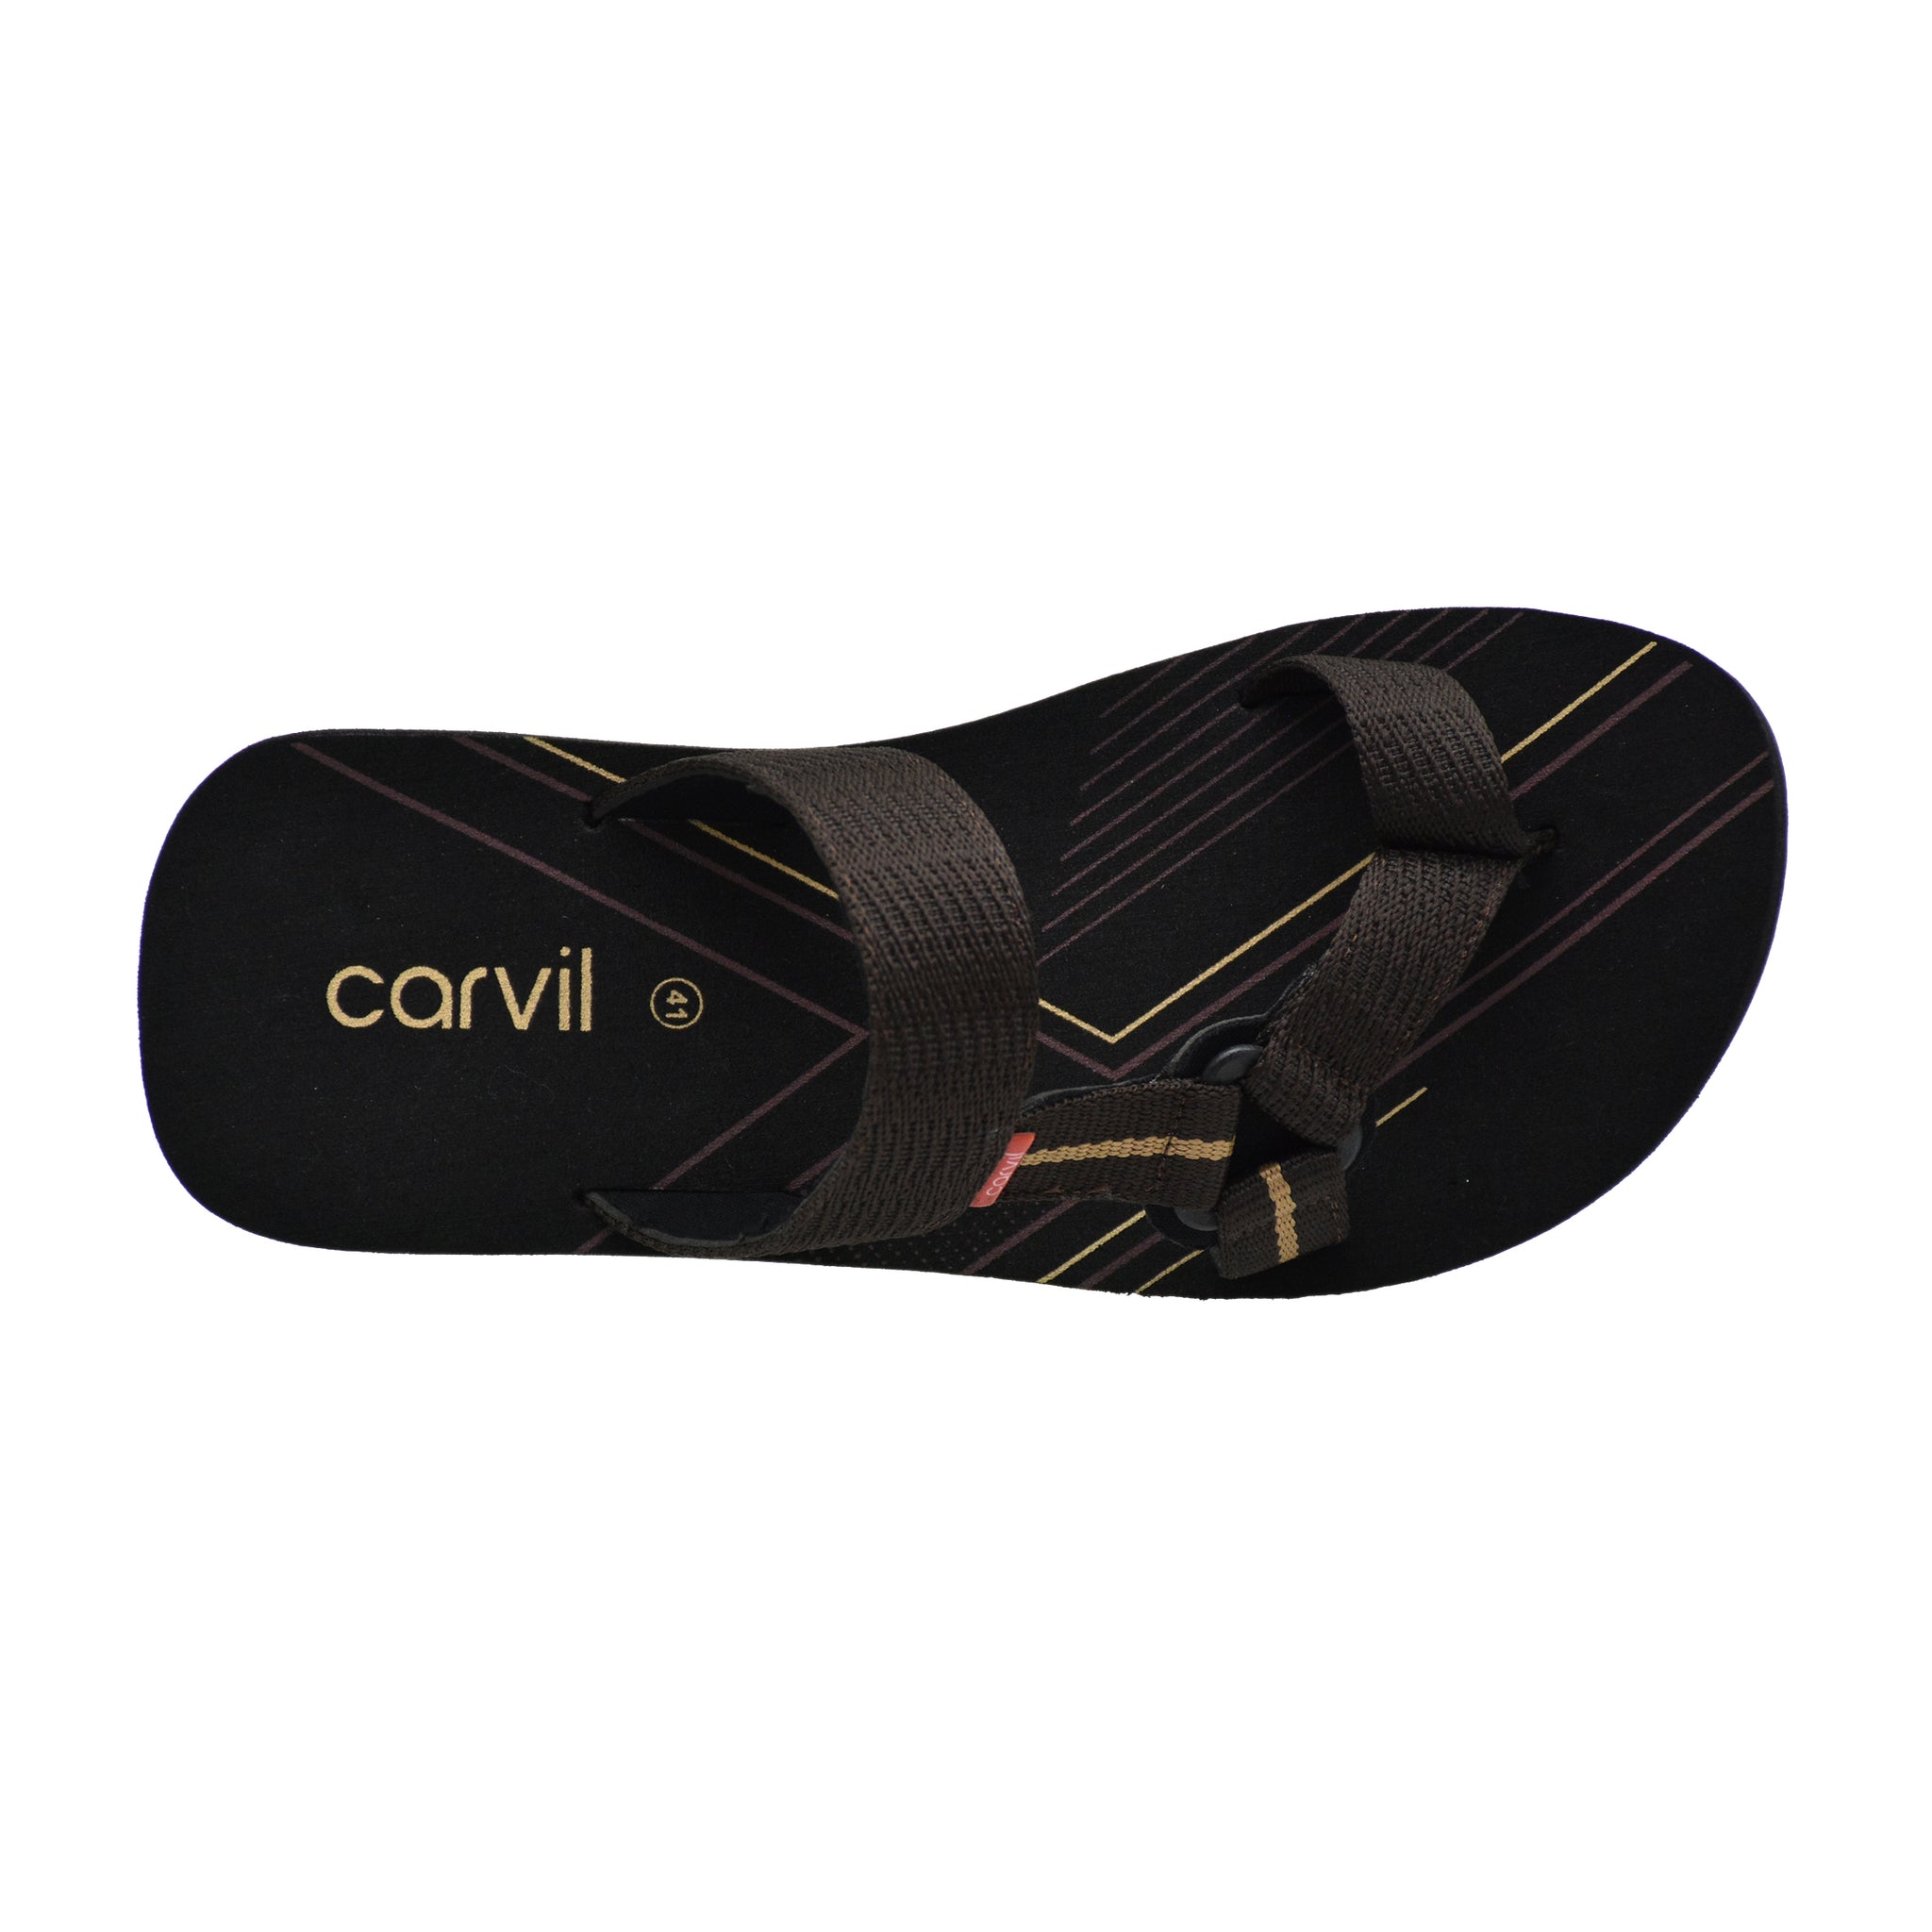 Carvil Sandal Pria SPEXTRA-S11 BROWN/BEIGE